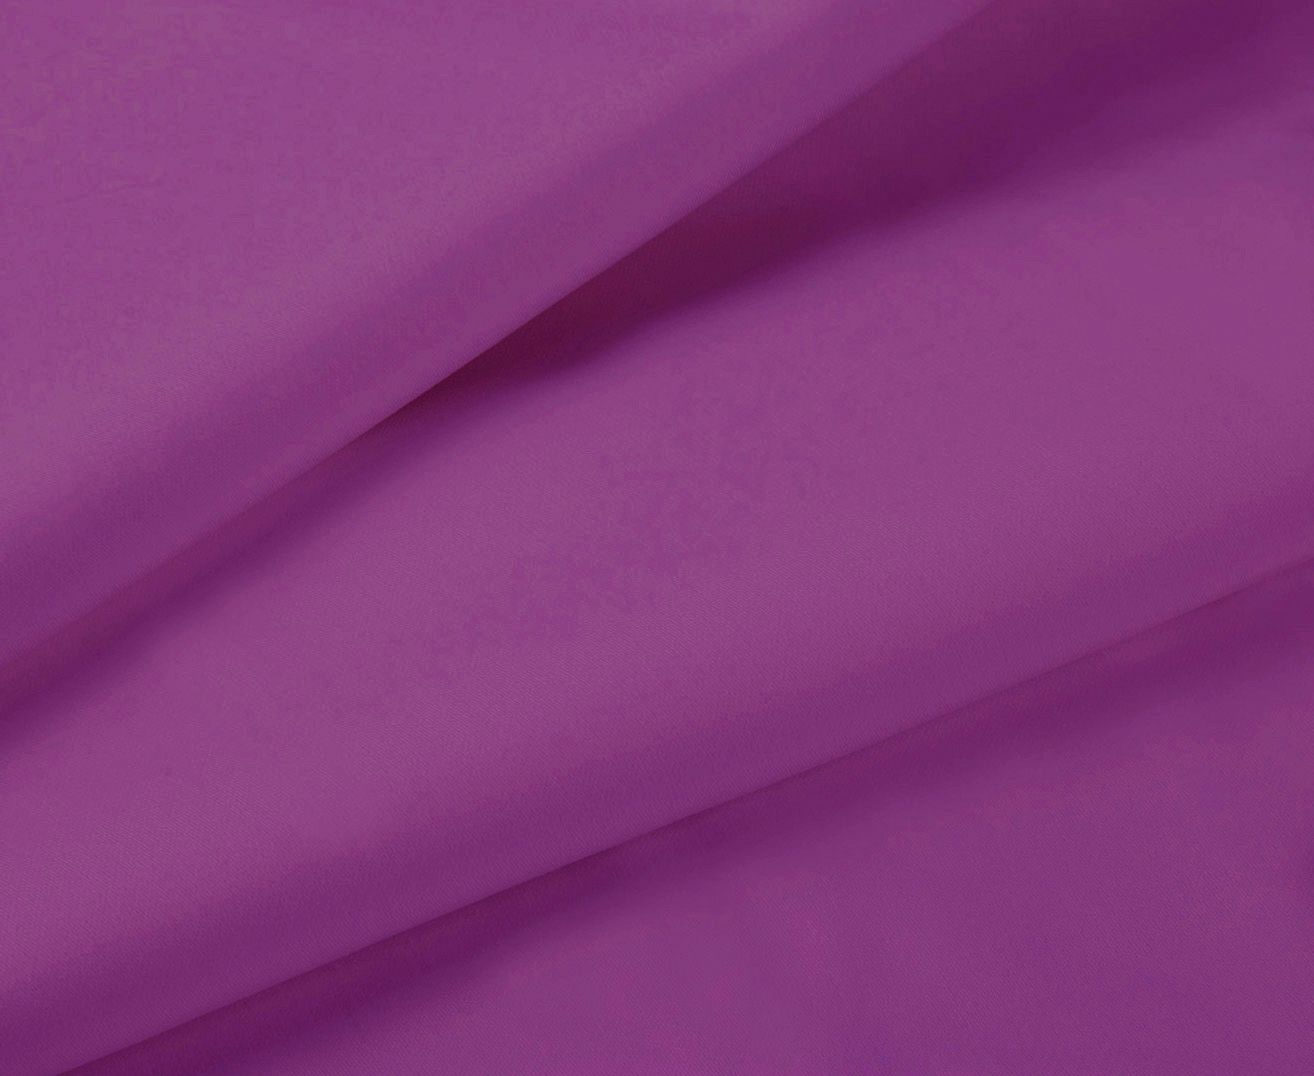 1000TC Ultra Soft King Single Size Bed Purple Flat & Fitted Sheet Set